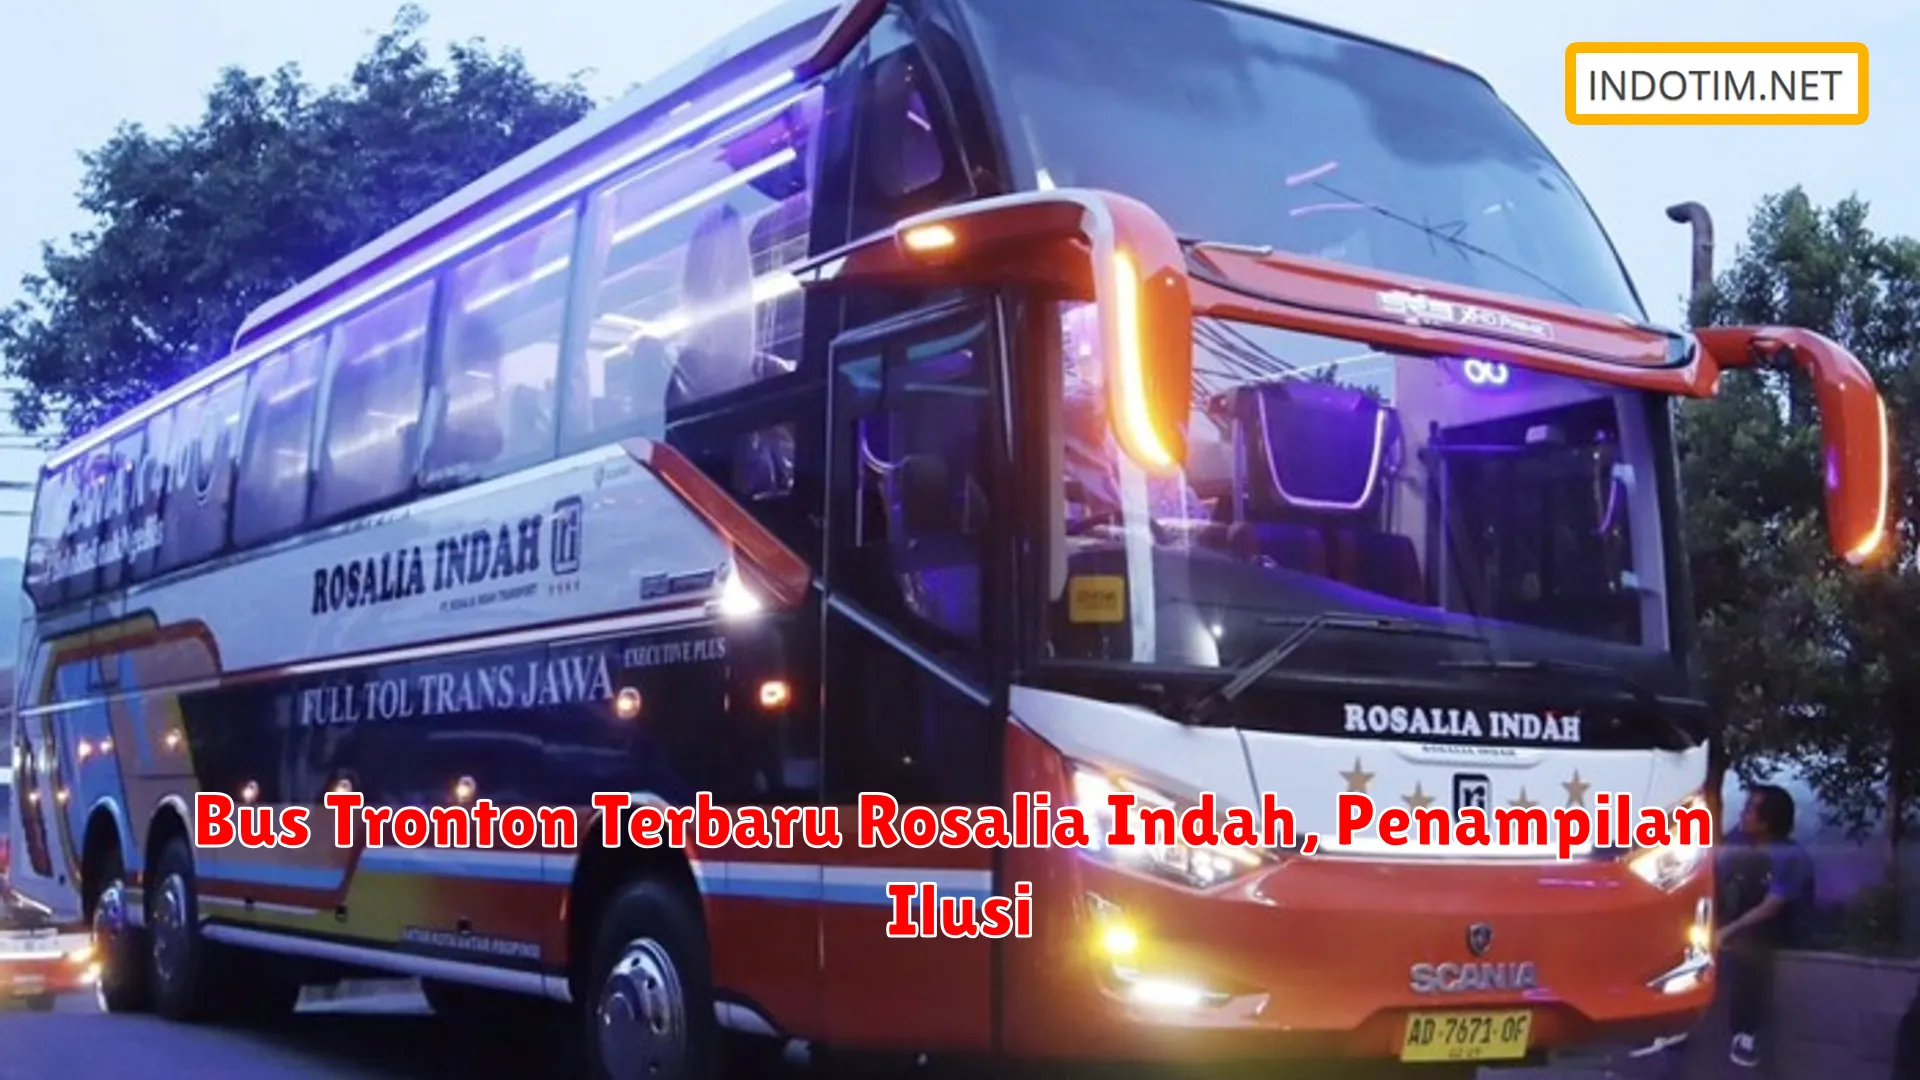 Bus Tronton Terbaru Rosalia Indah, Penampilan Ilusi